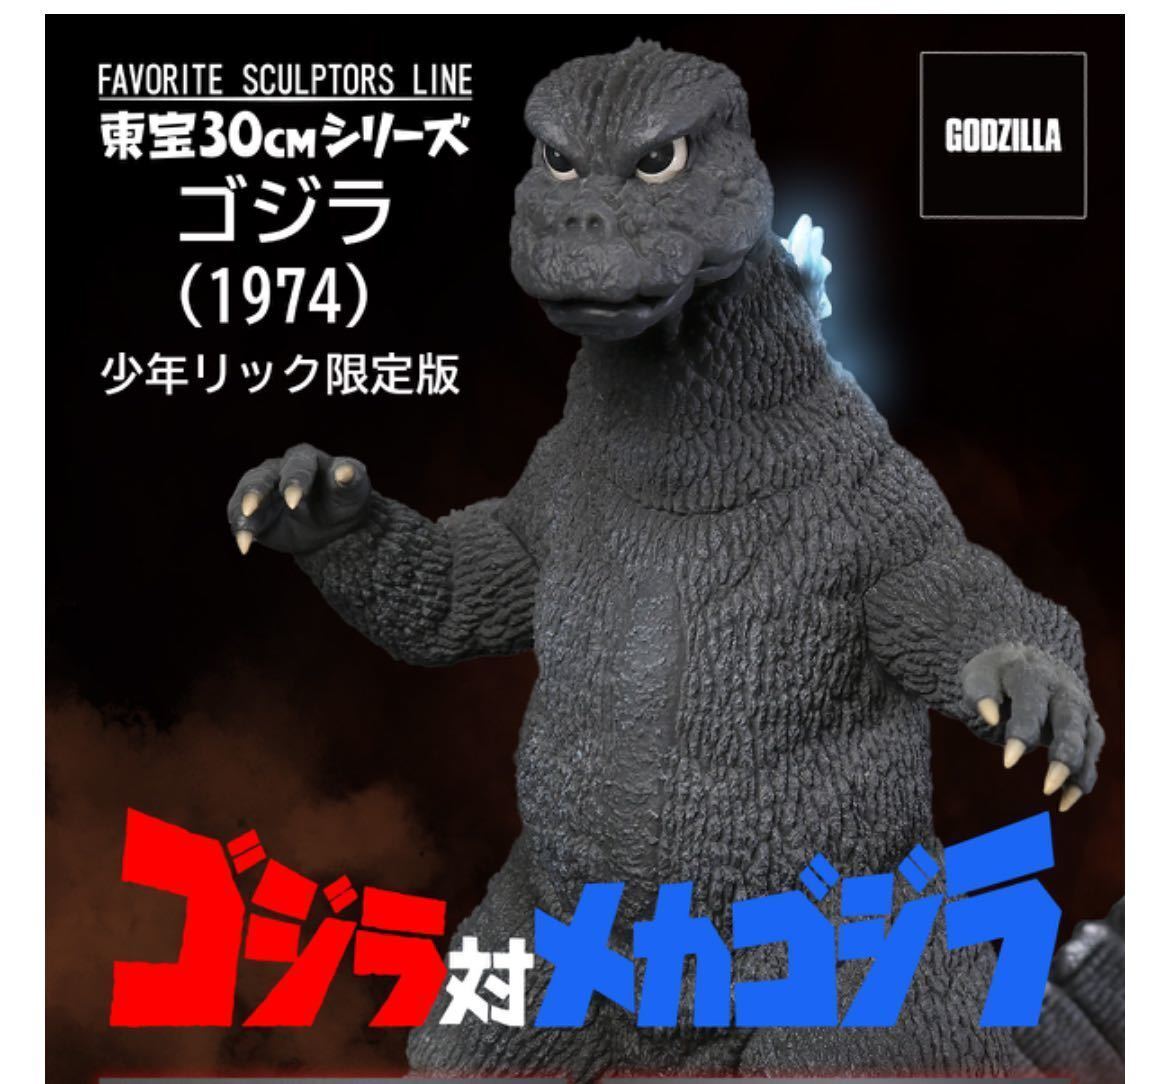 X-PLUS Toho 30cm Series Favorite Sculptors Line Godzilla 1974 figure 2023